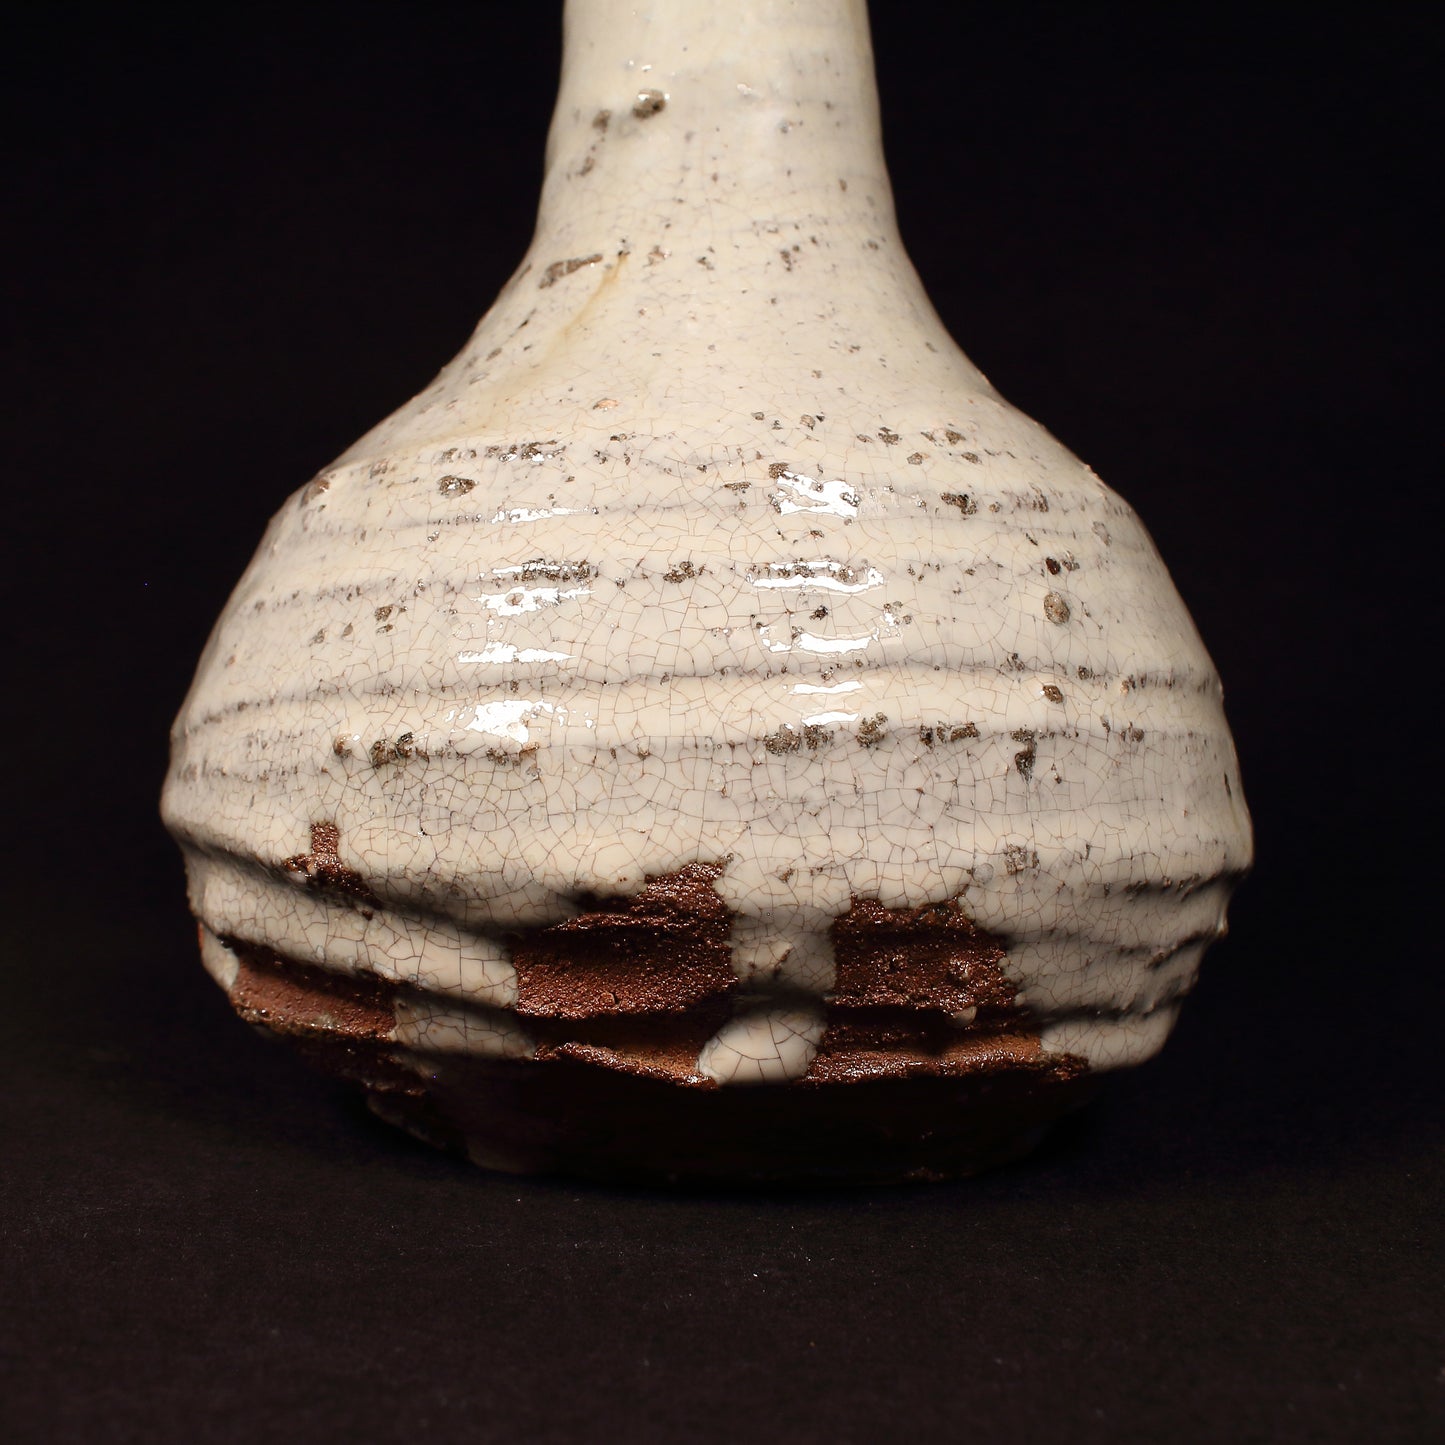 Karatsu ware | Naoki Kojima | Madara Karatsu , crane neck flower vase [one-of-a-kind item]